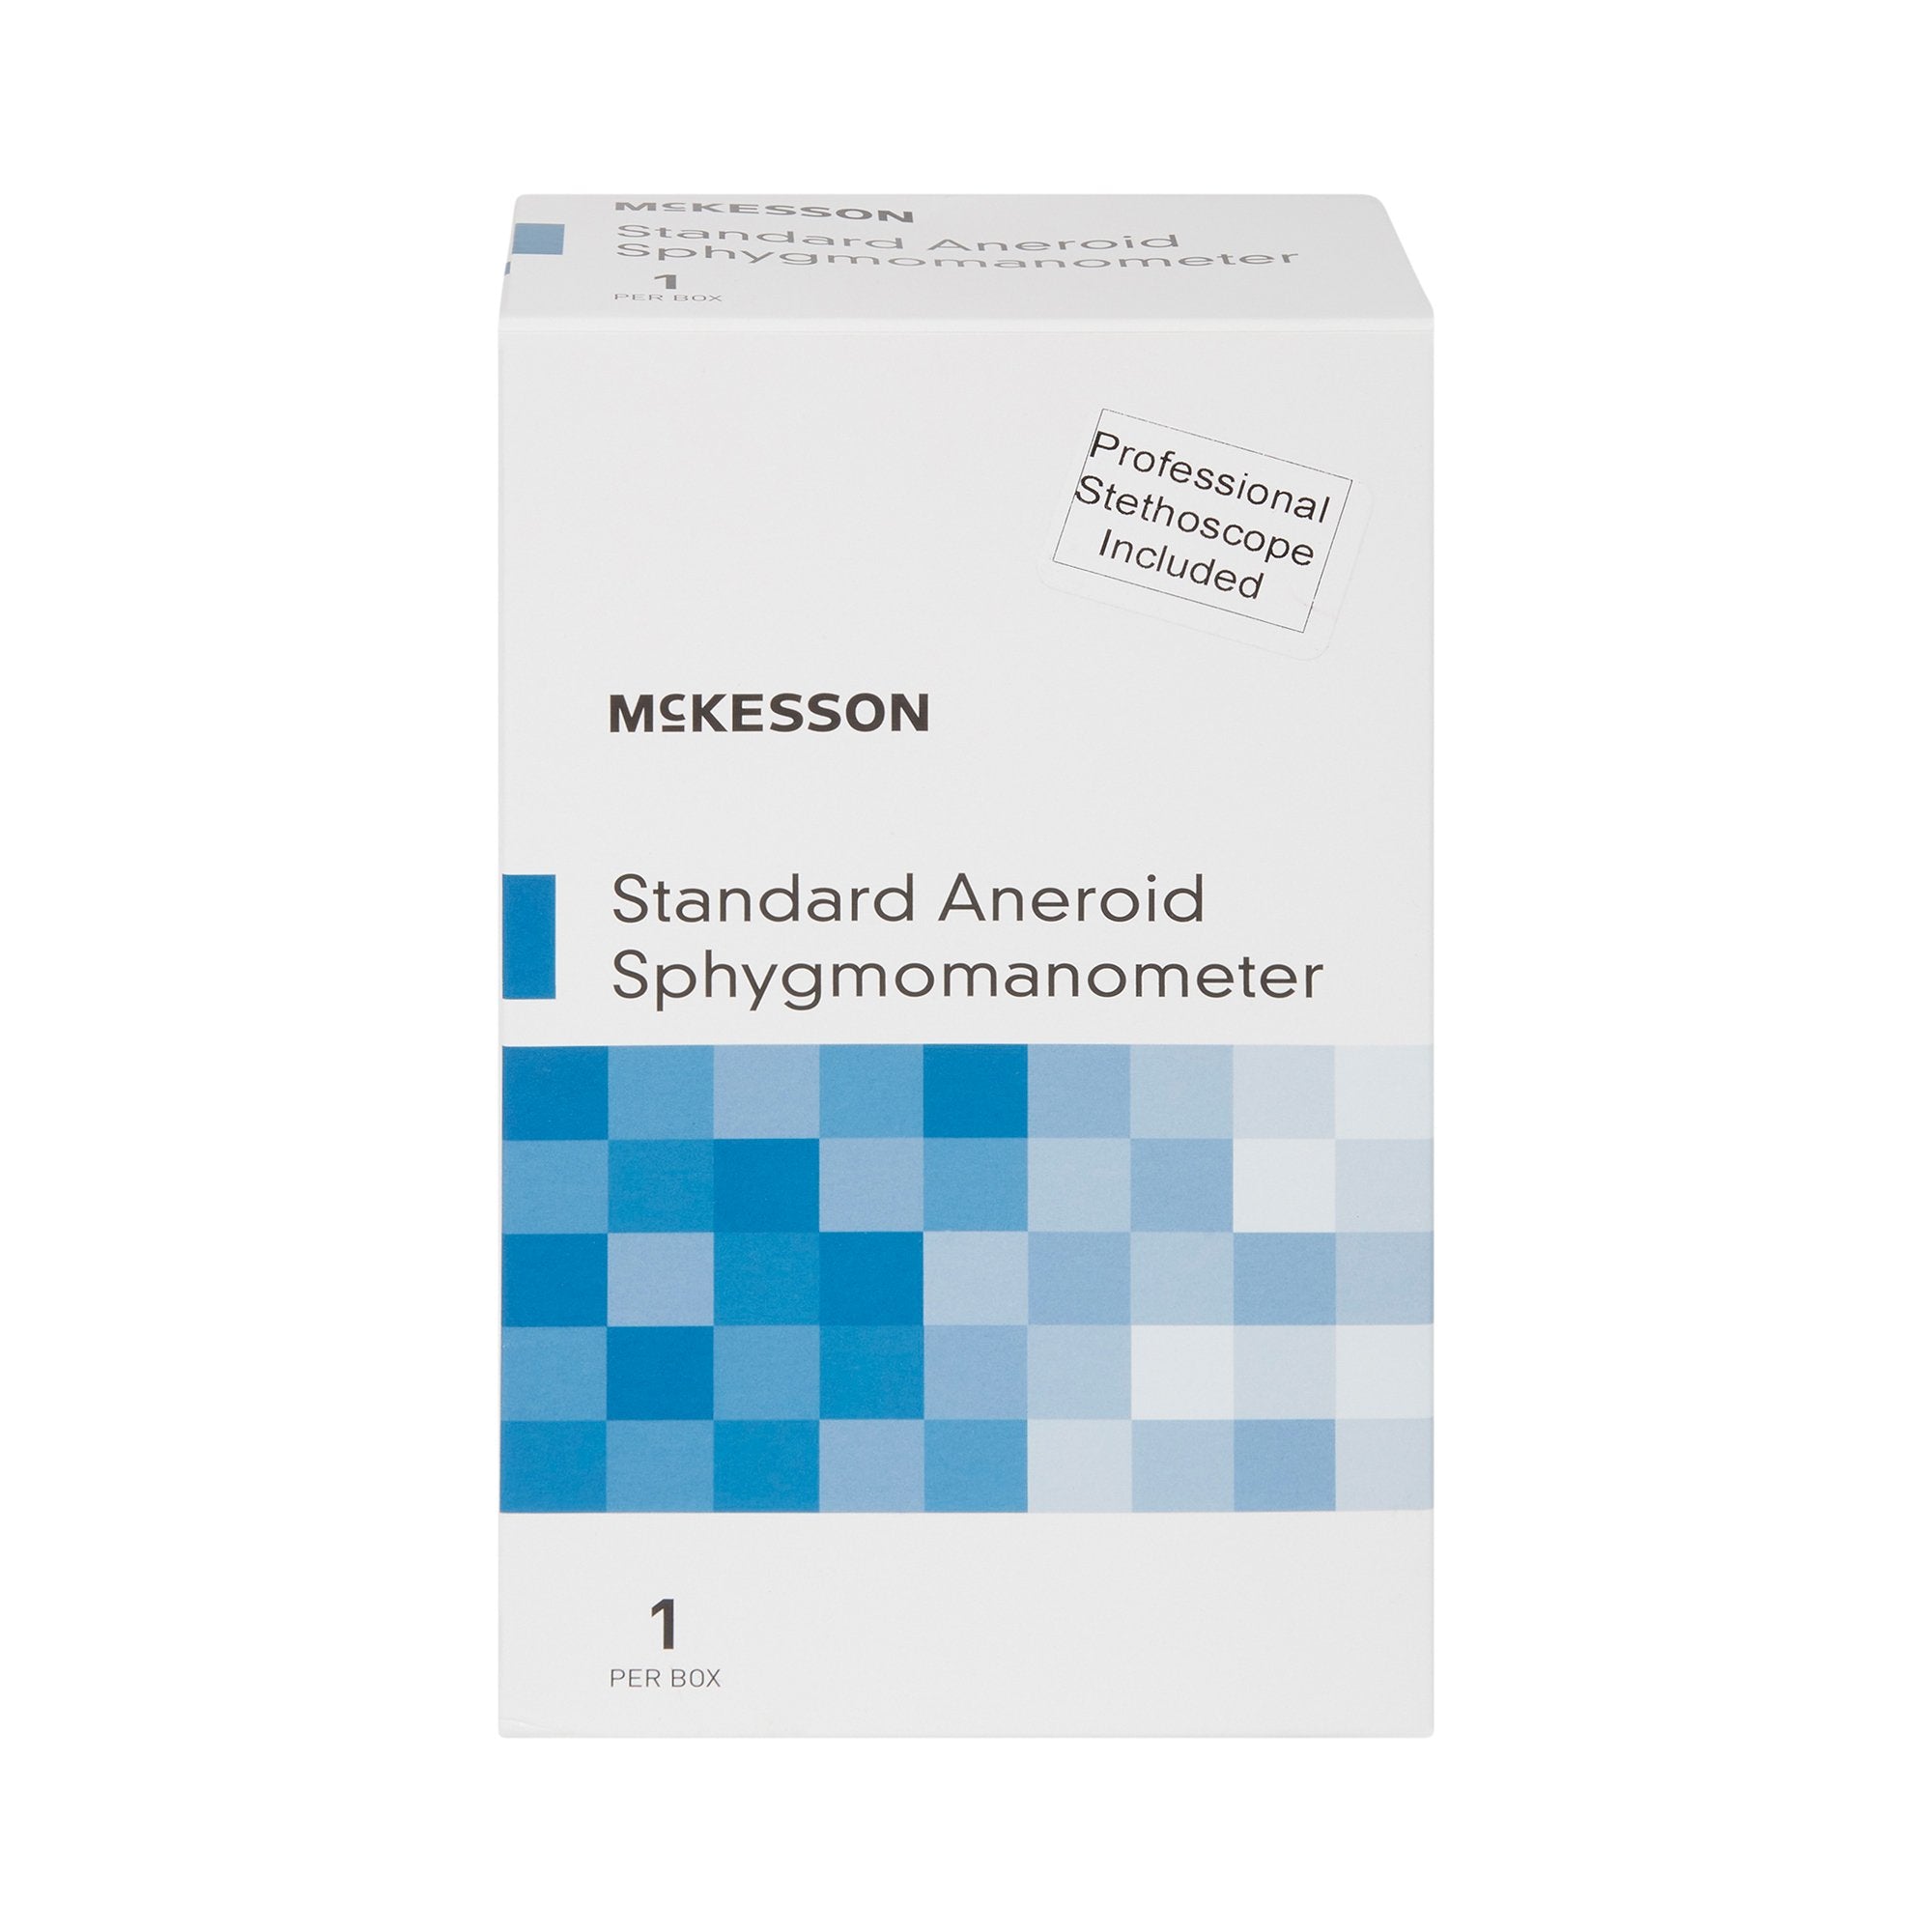 Reusable Aneroid / Stethoscope Set McKesson Brand 23 to 40 cm Adult Cuff Single Head General Exam Pocket Aneroid